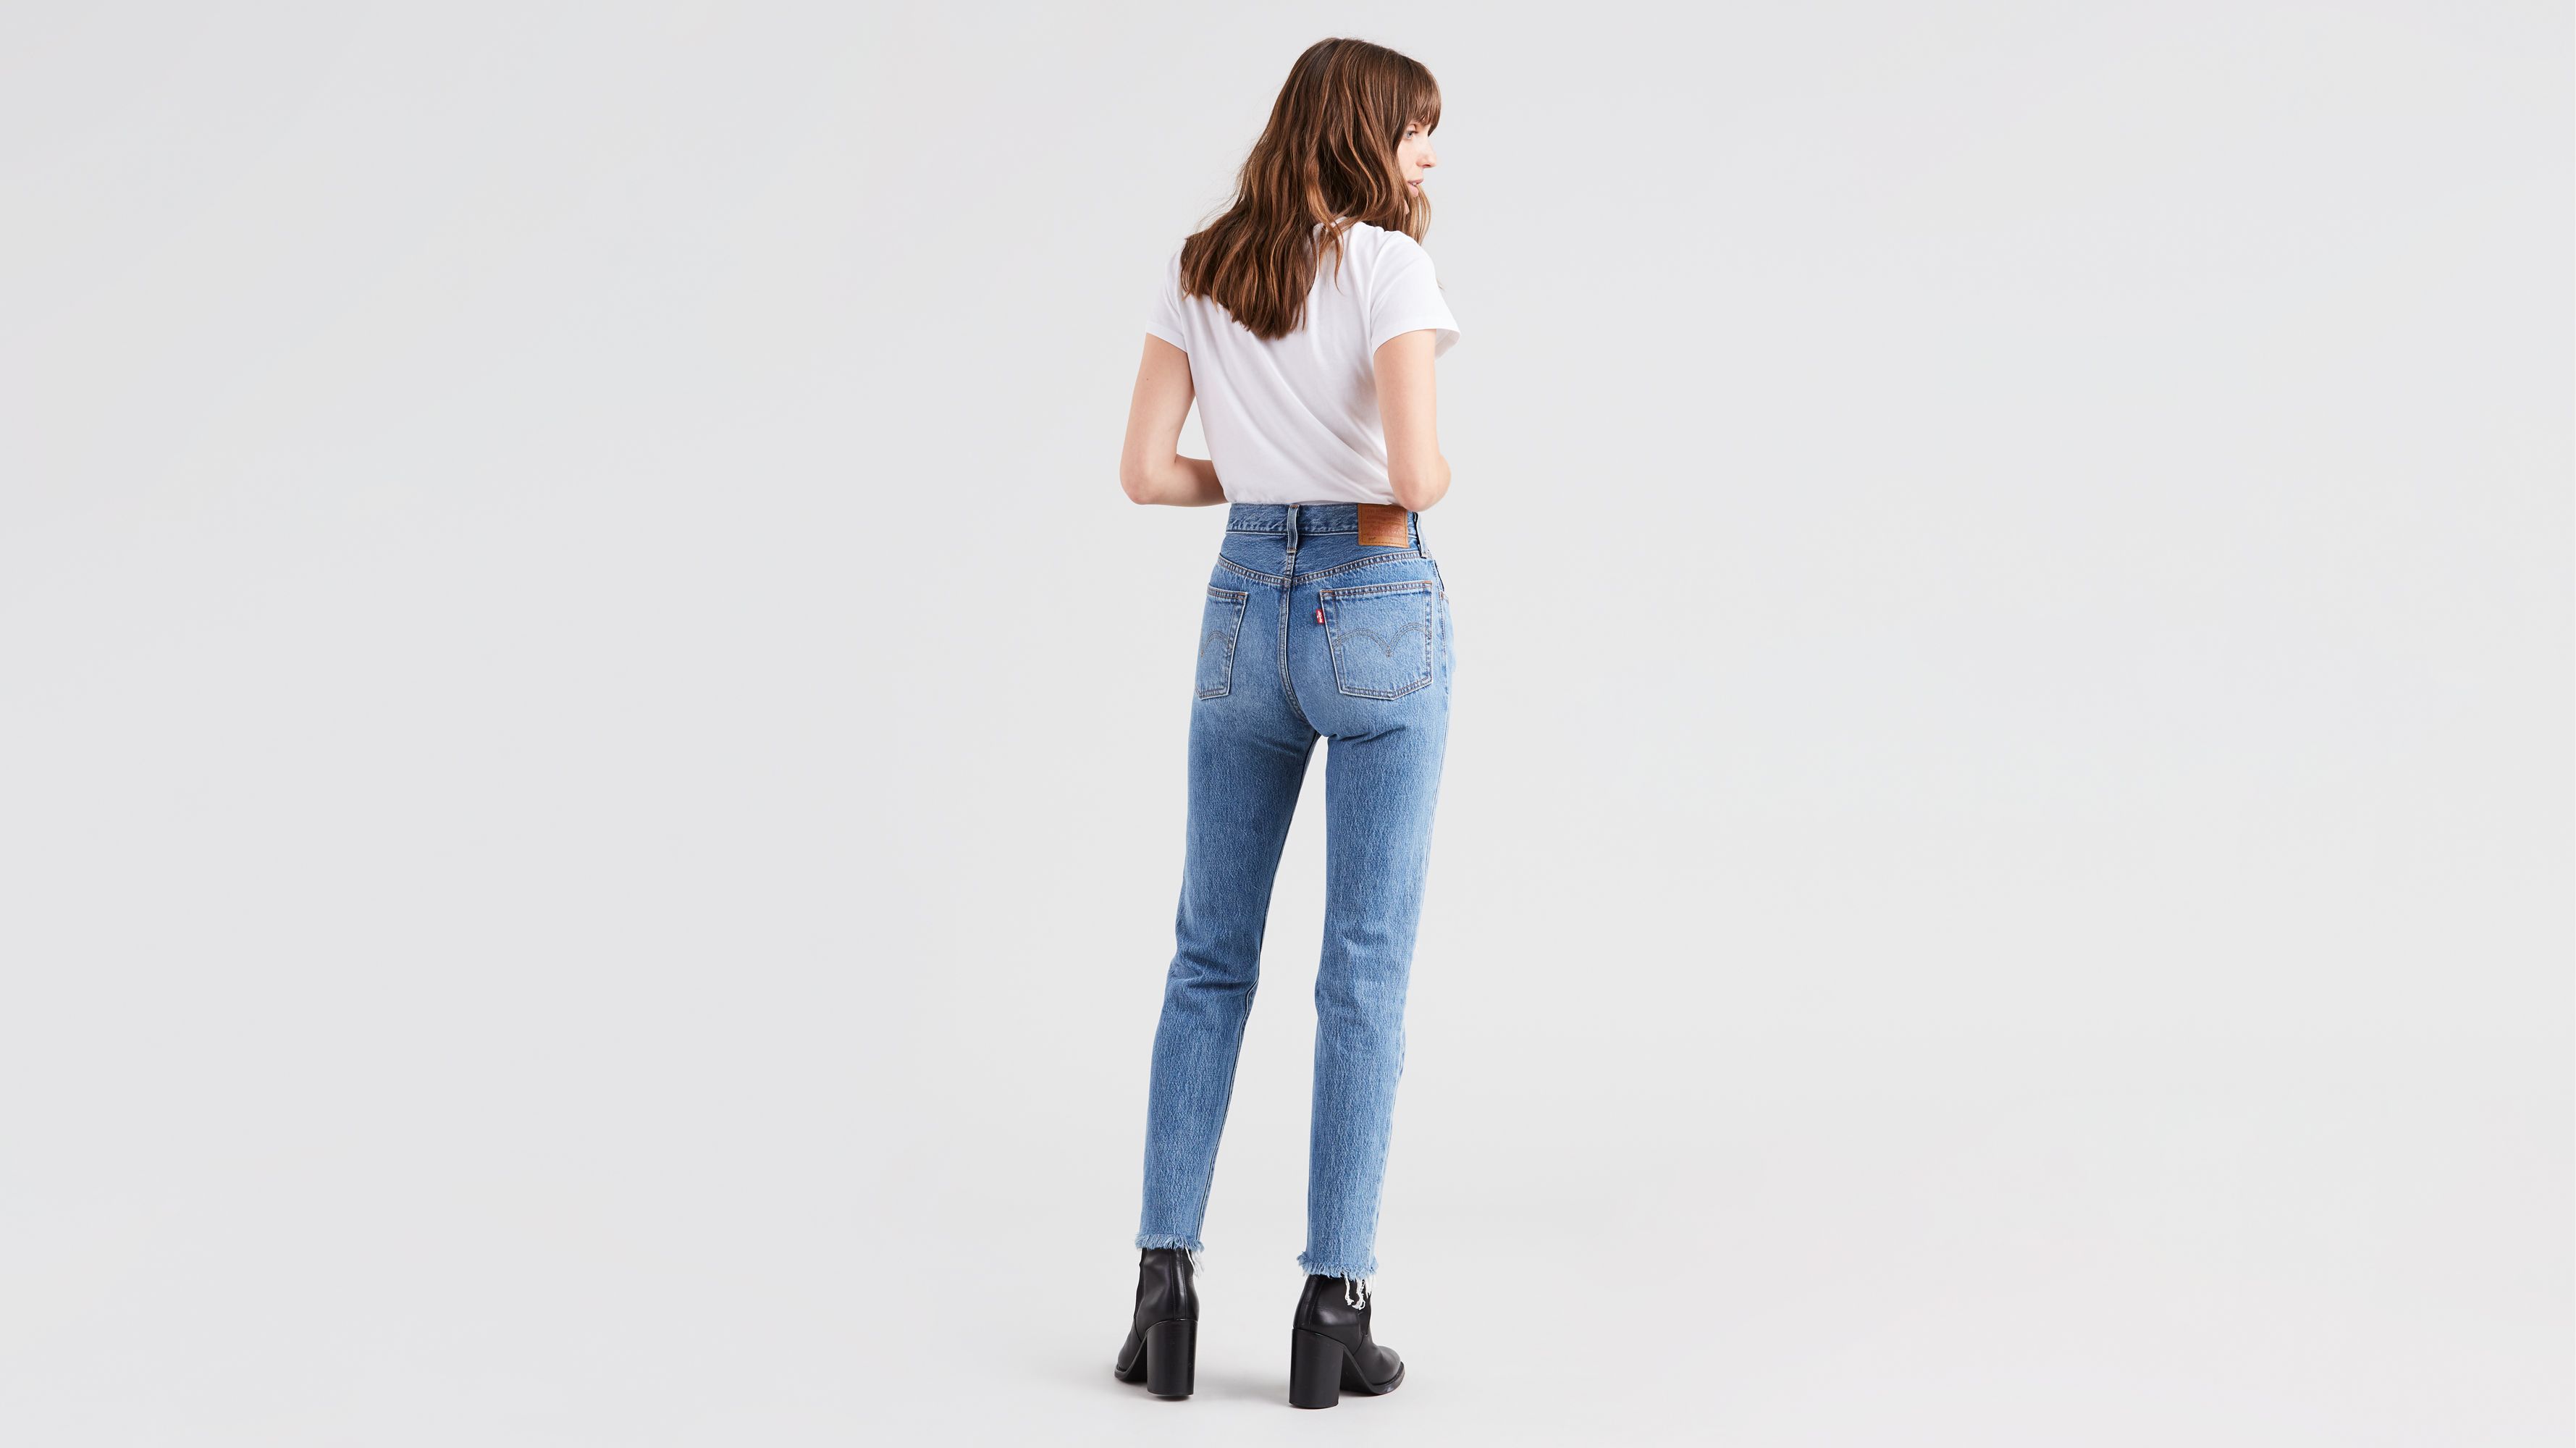 501 original fit jeans womens